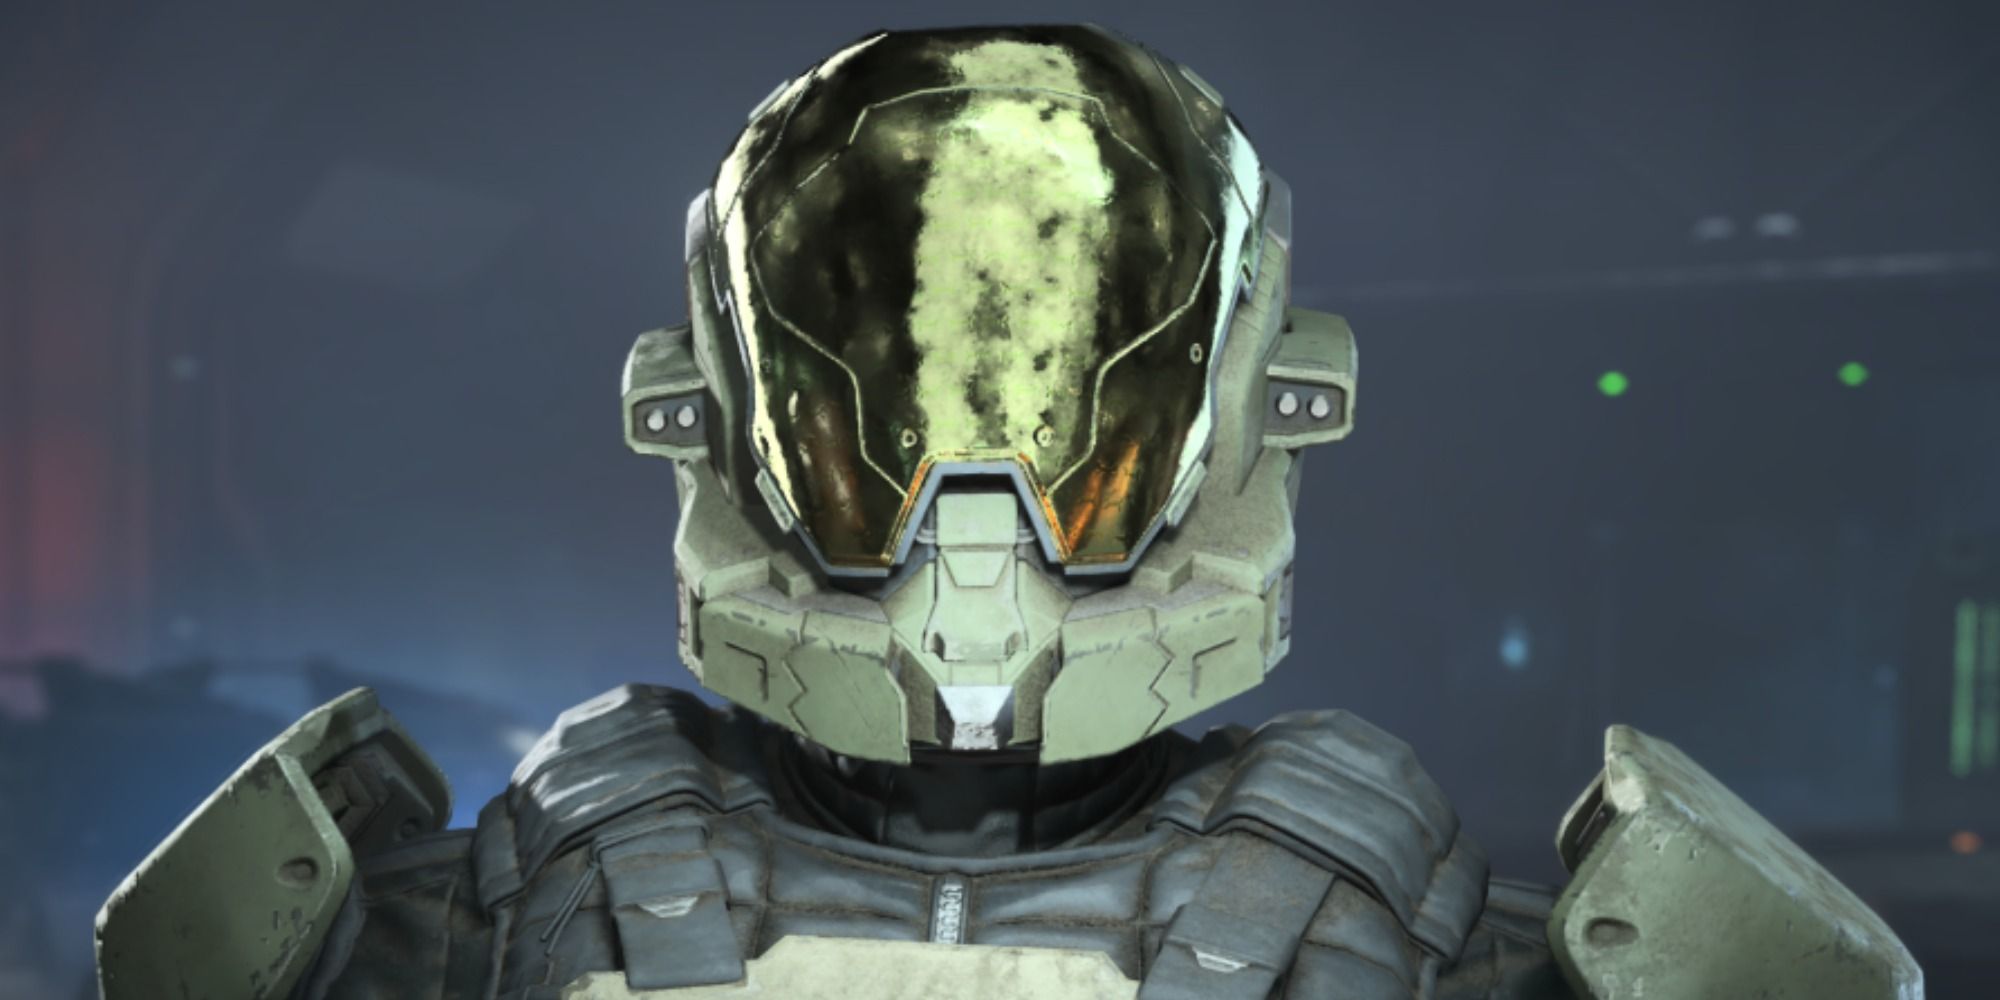 The Stribog Helmet in Halo Infinite